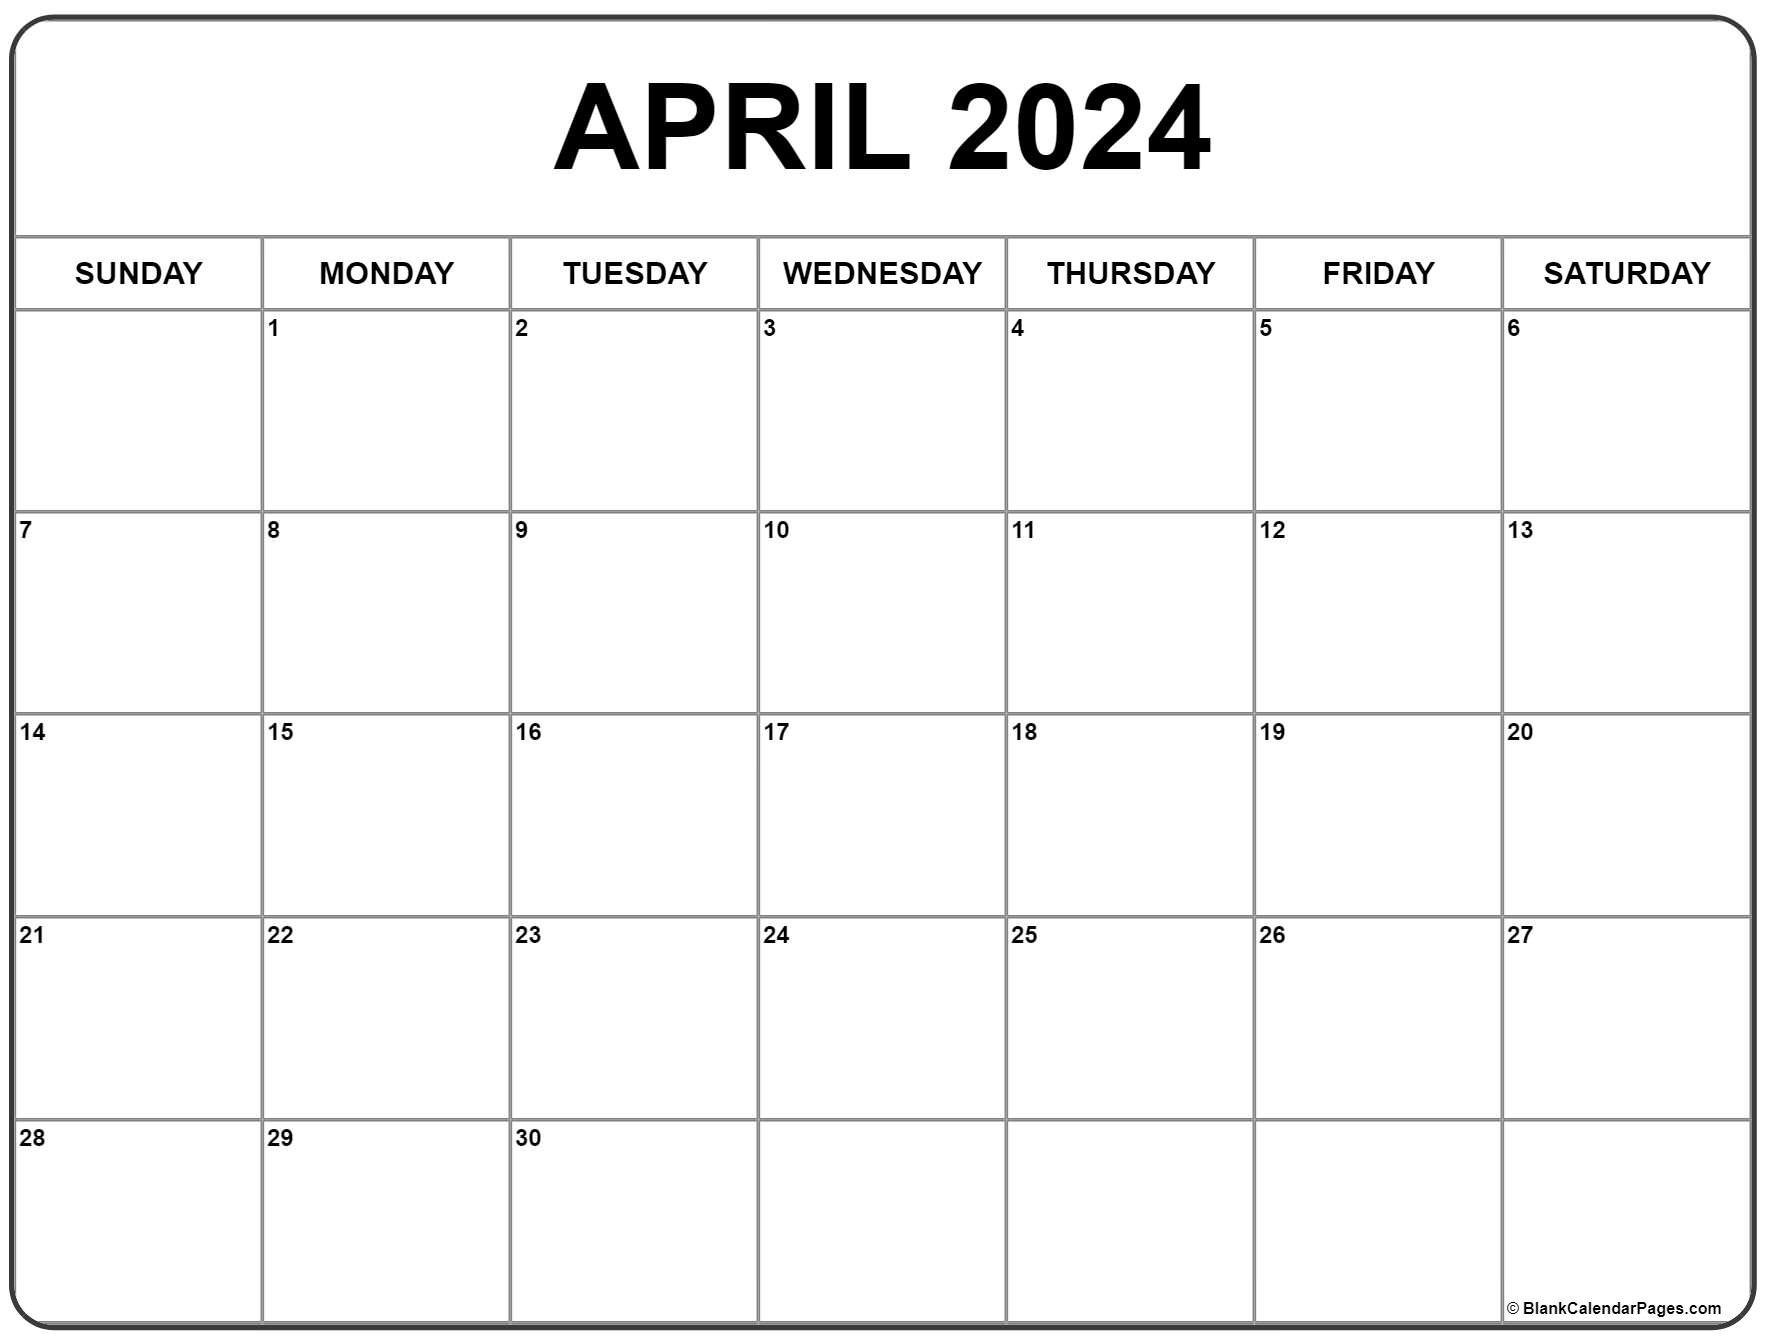 April 2024 Calendar | Free Printable Calendar for Calendar 2024 April Printable